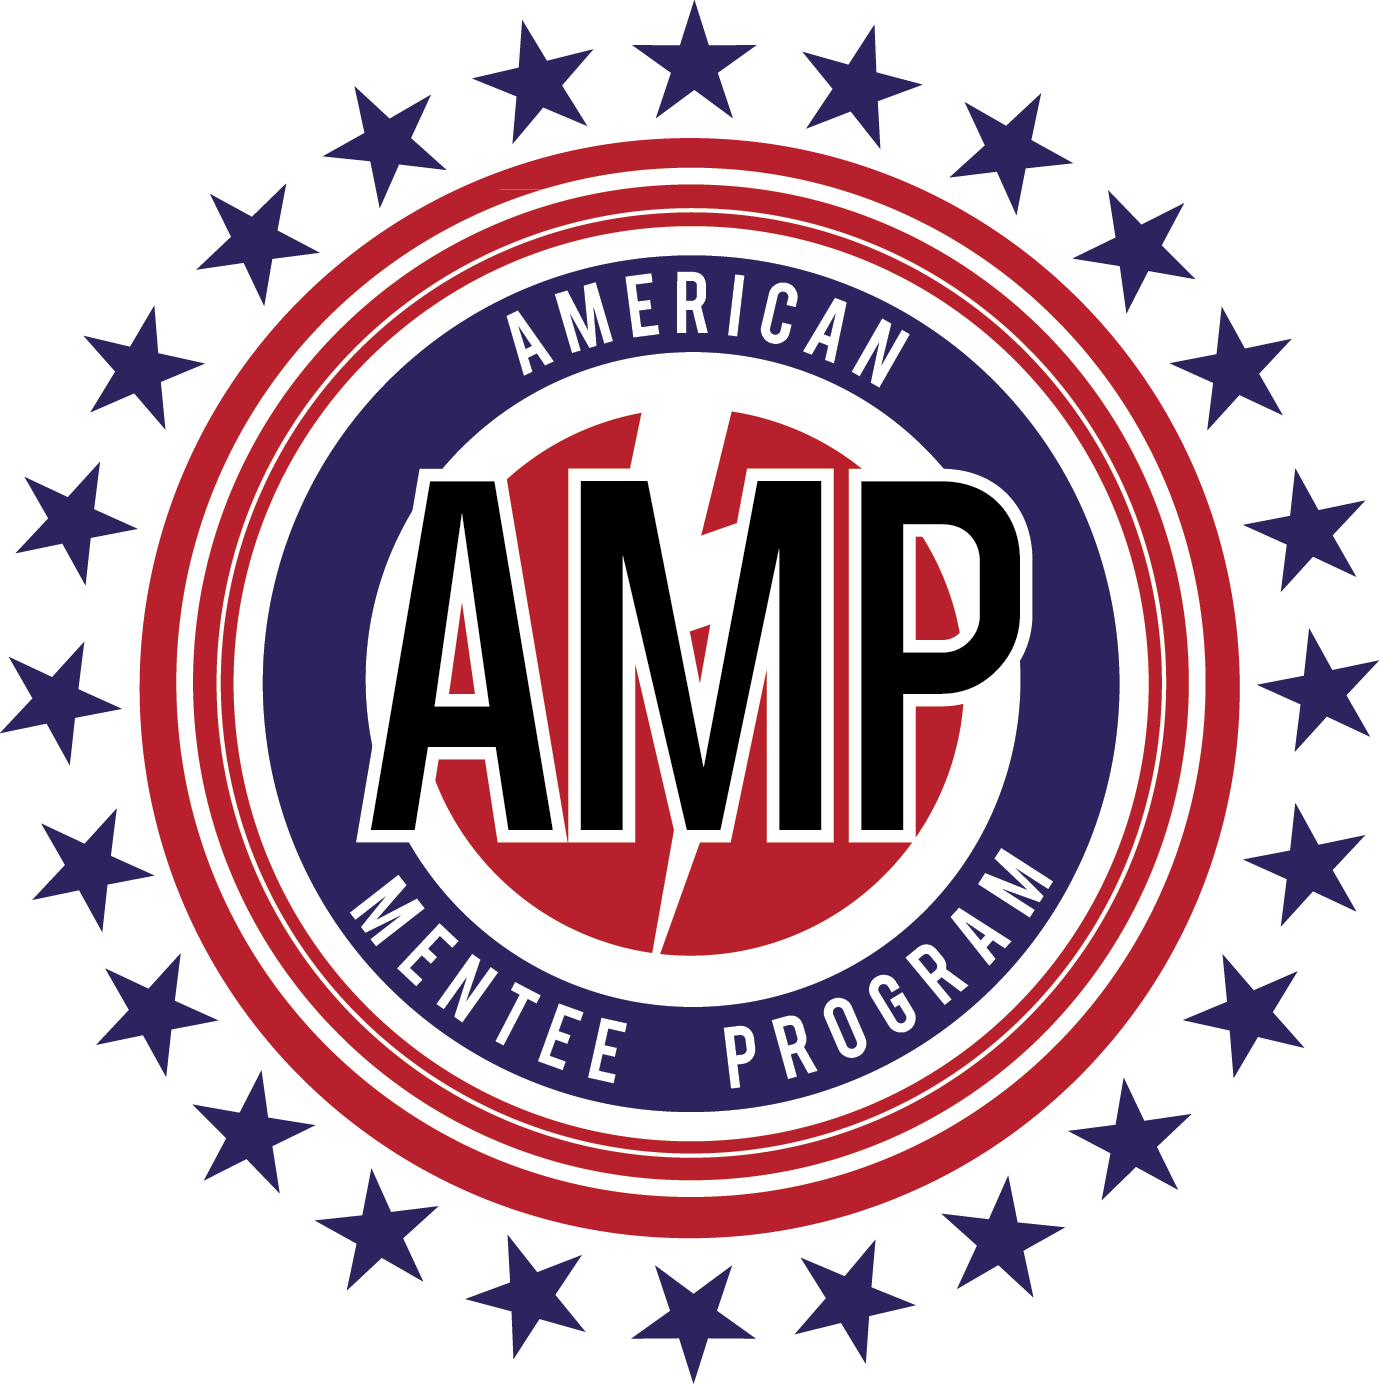 AMP Live! "The American Mentee Program"